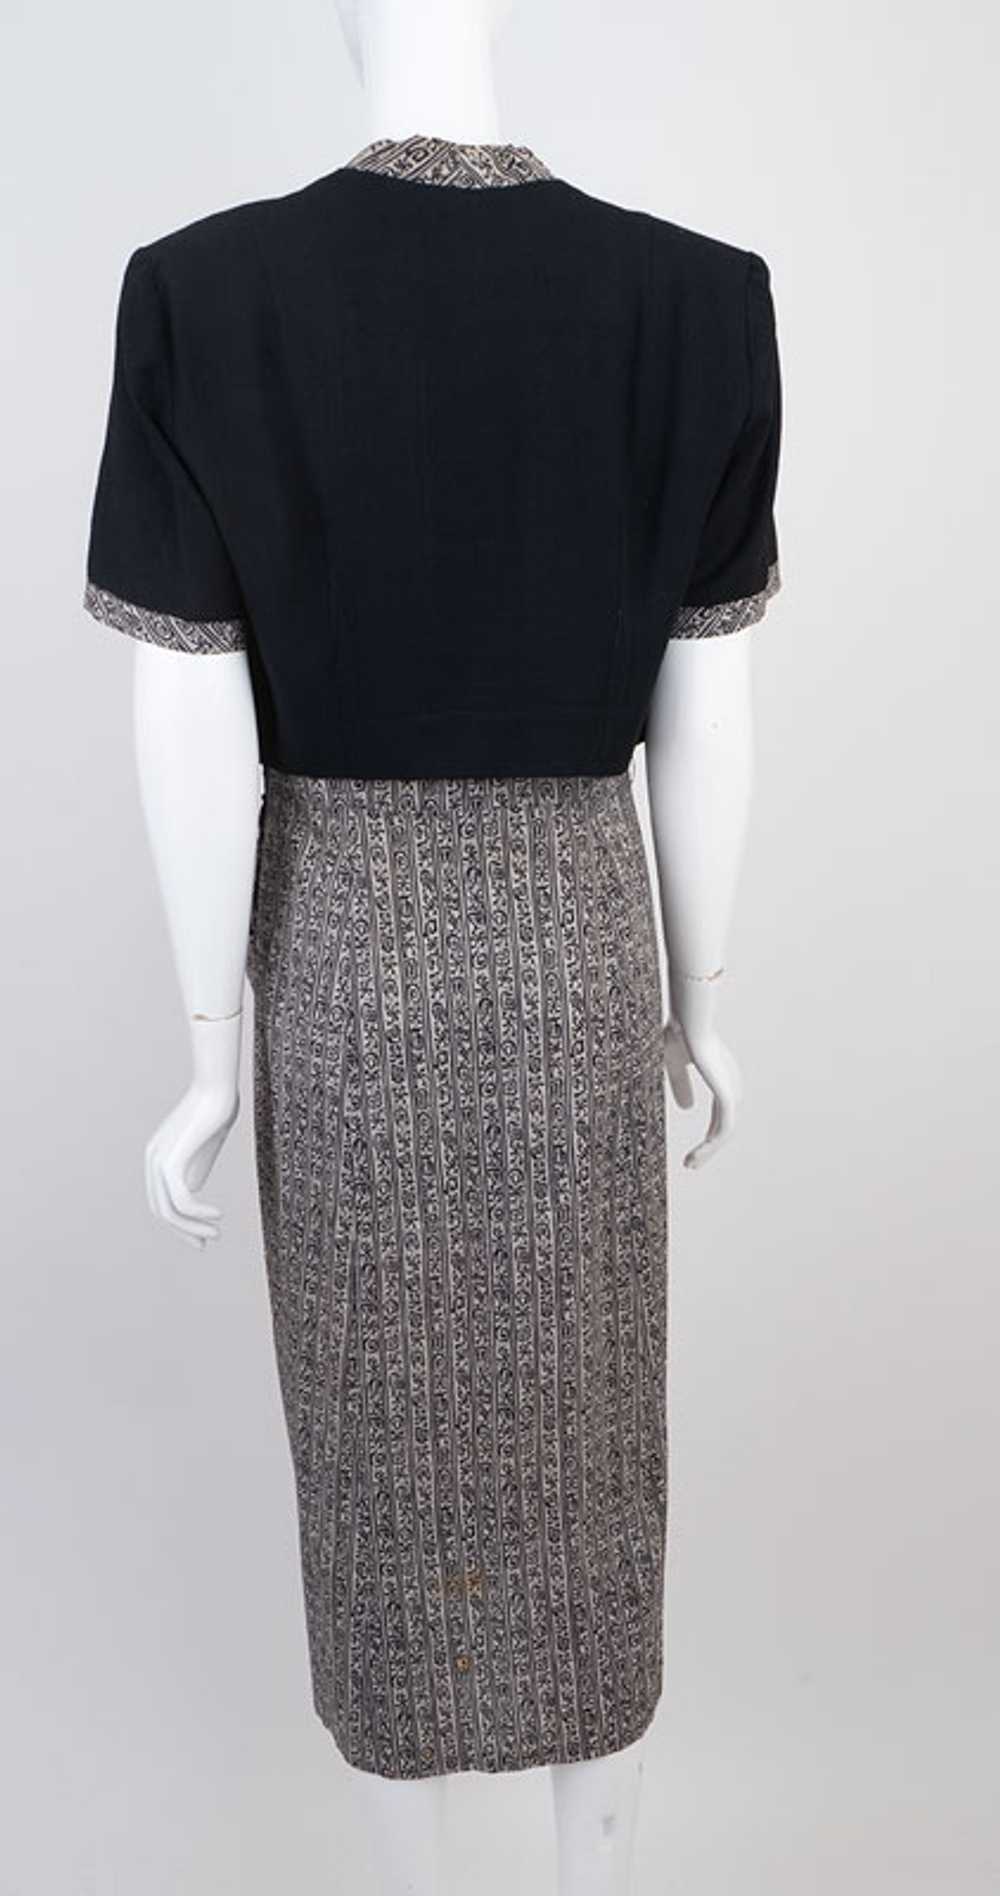 Fab 1950s Novelty Print Dress - image 6